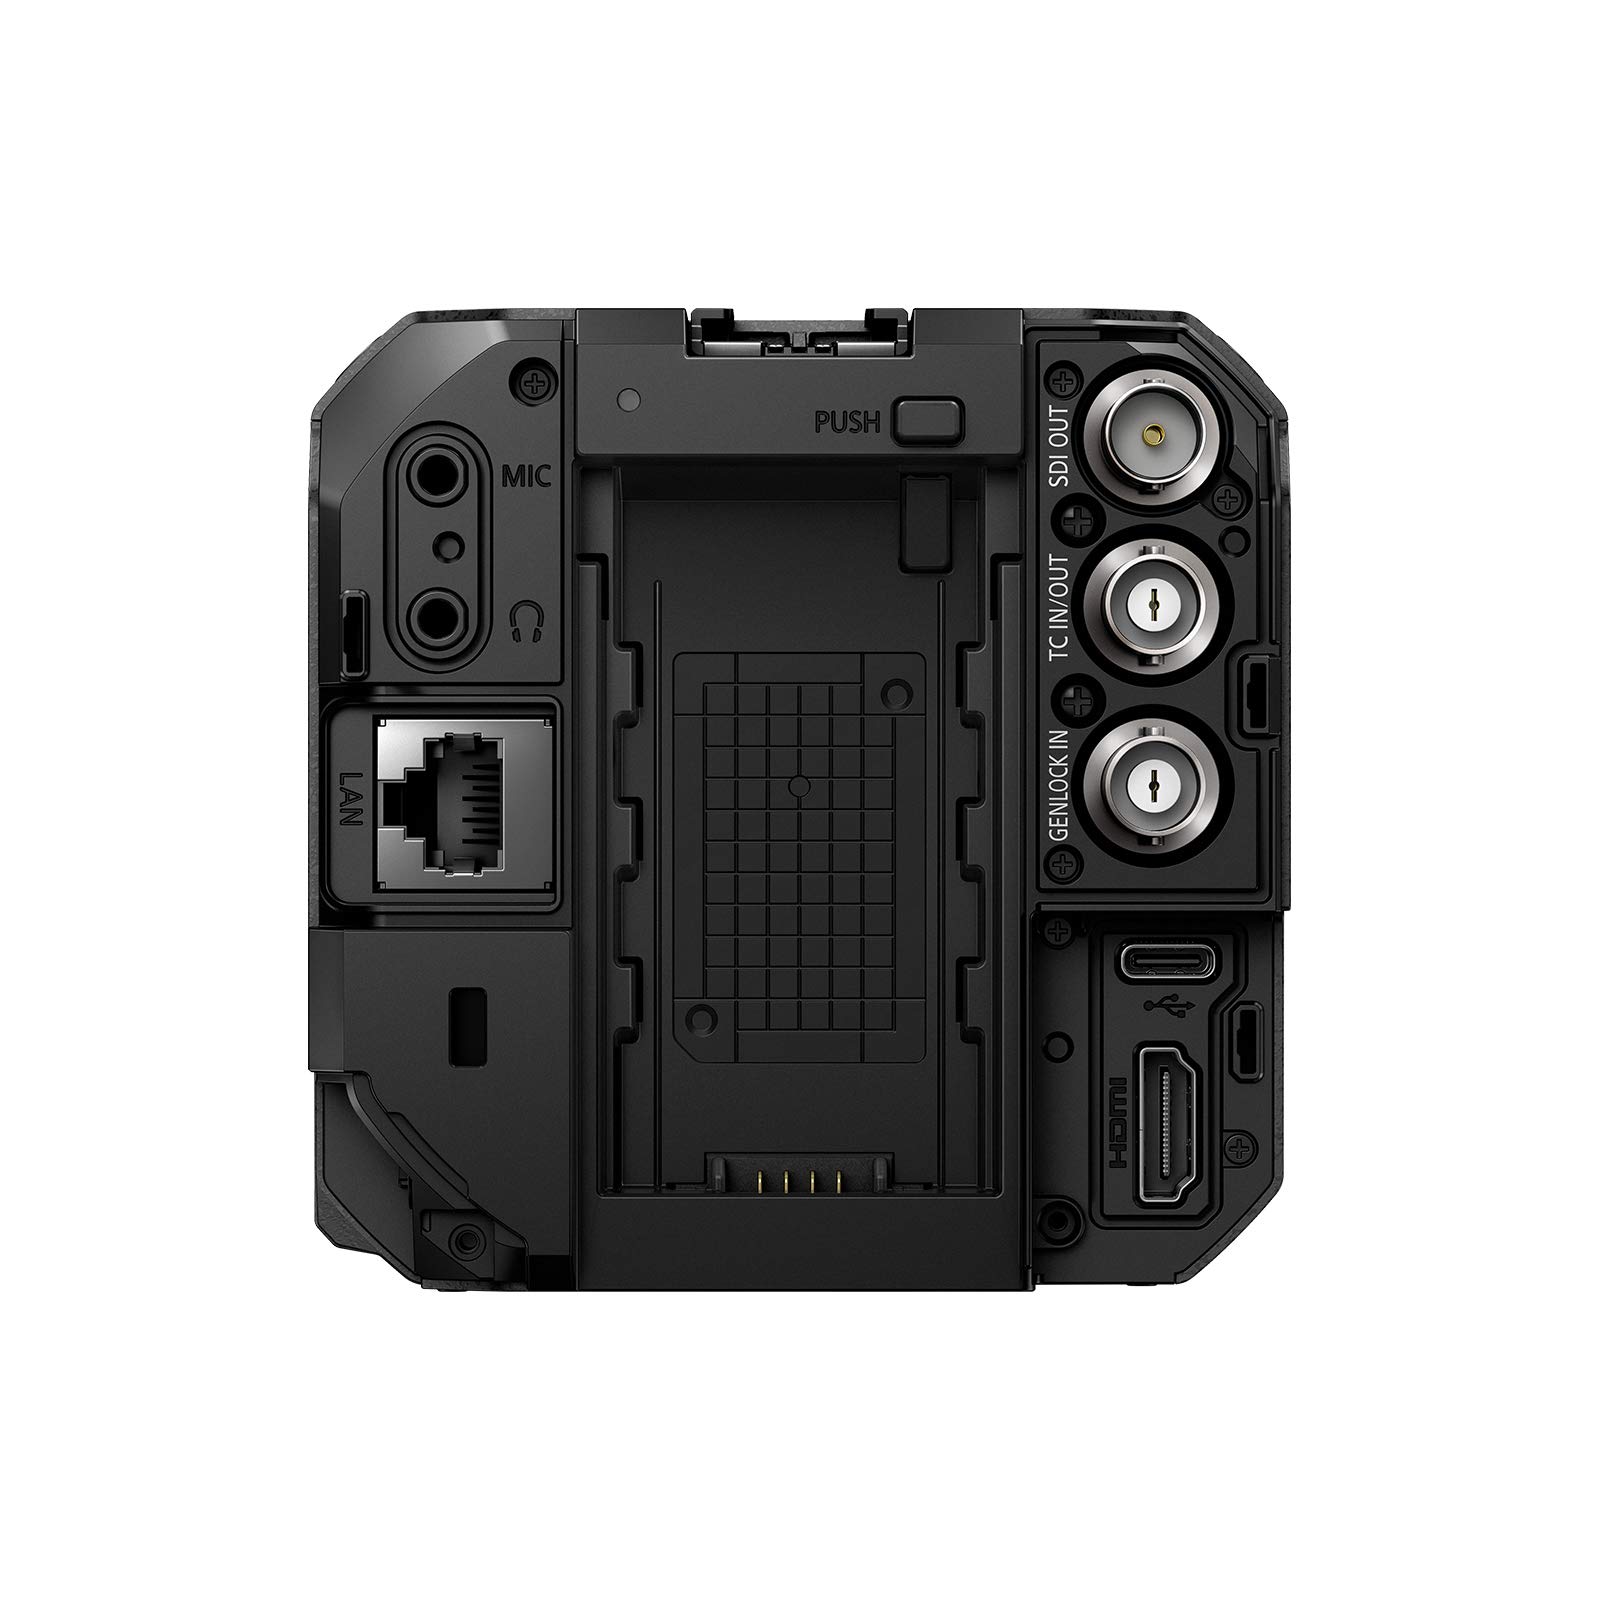 Panasonic LUMIX BGH1 Cinema 4K Box Camera, Micro Four Thirds with Livestreaming (DC-BGH1), Black